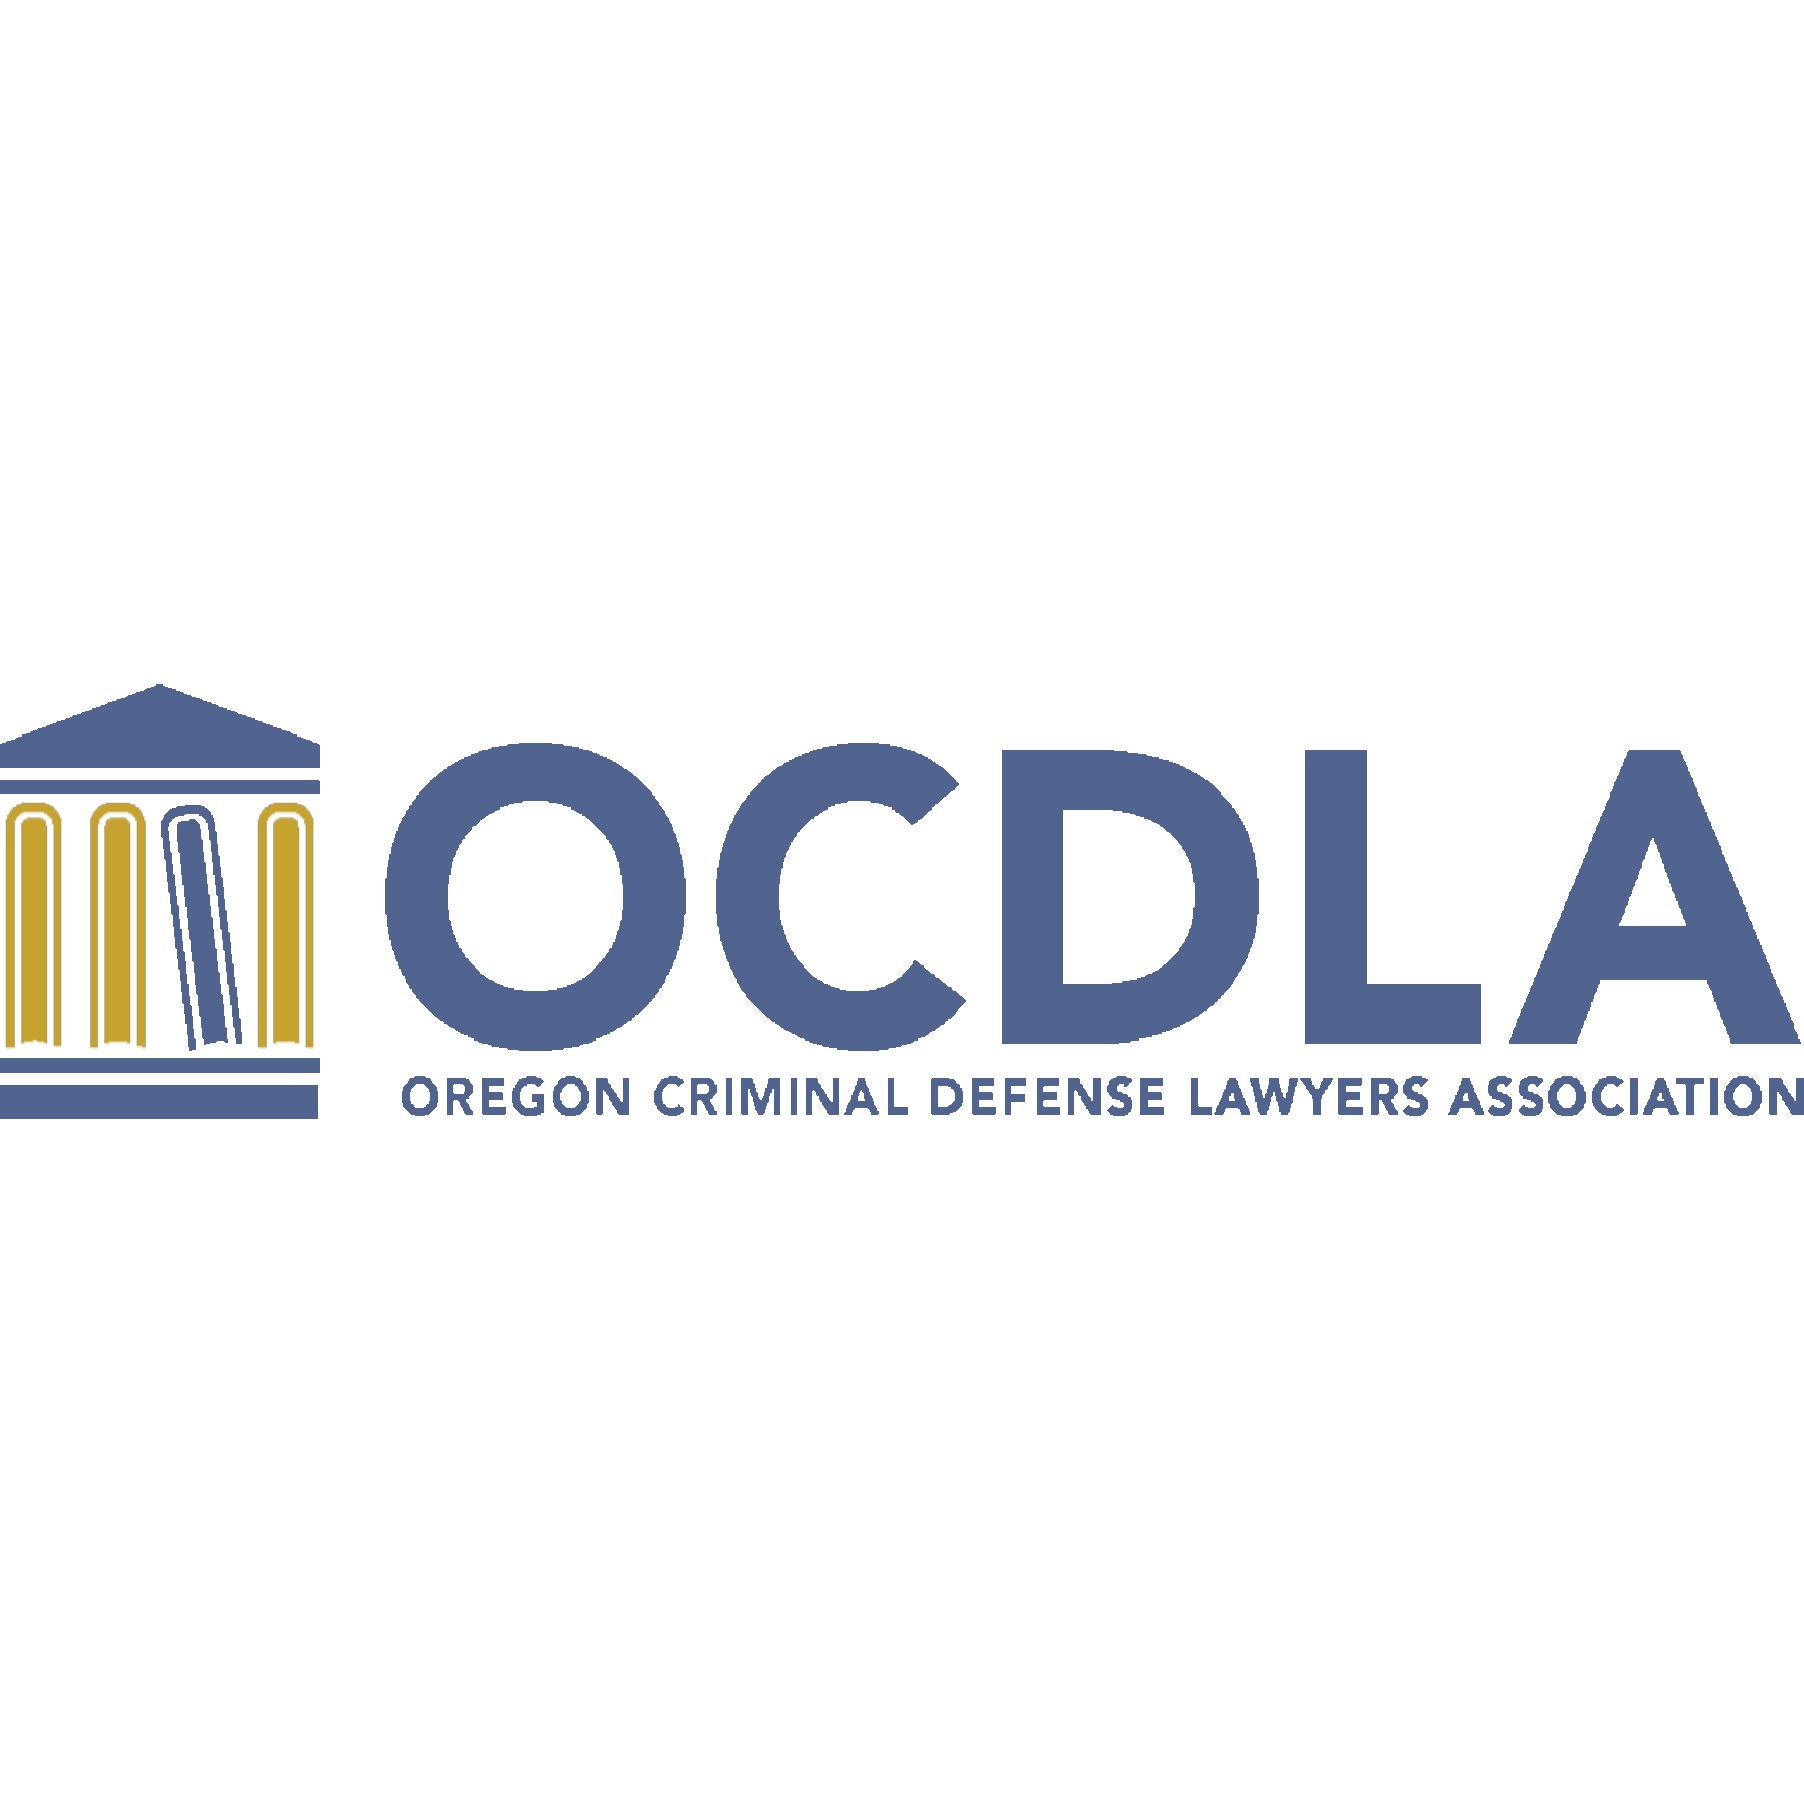 OCDLA - Oregon Criminal Defense Lawyers Association Logo